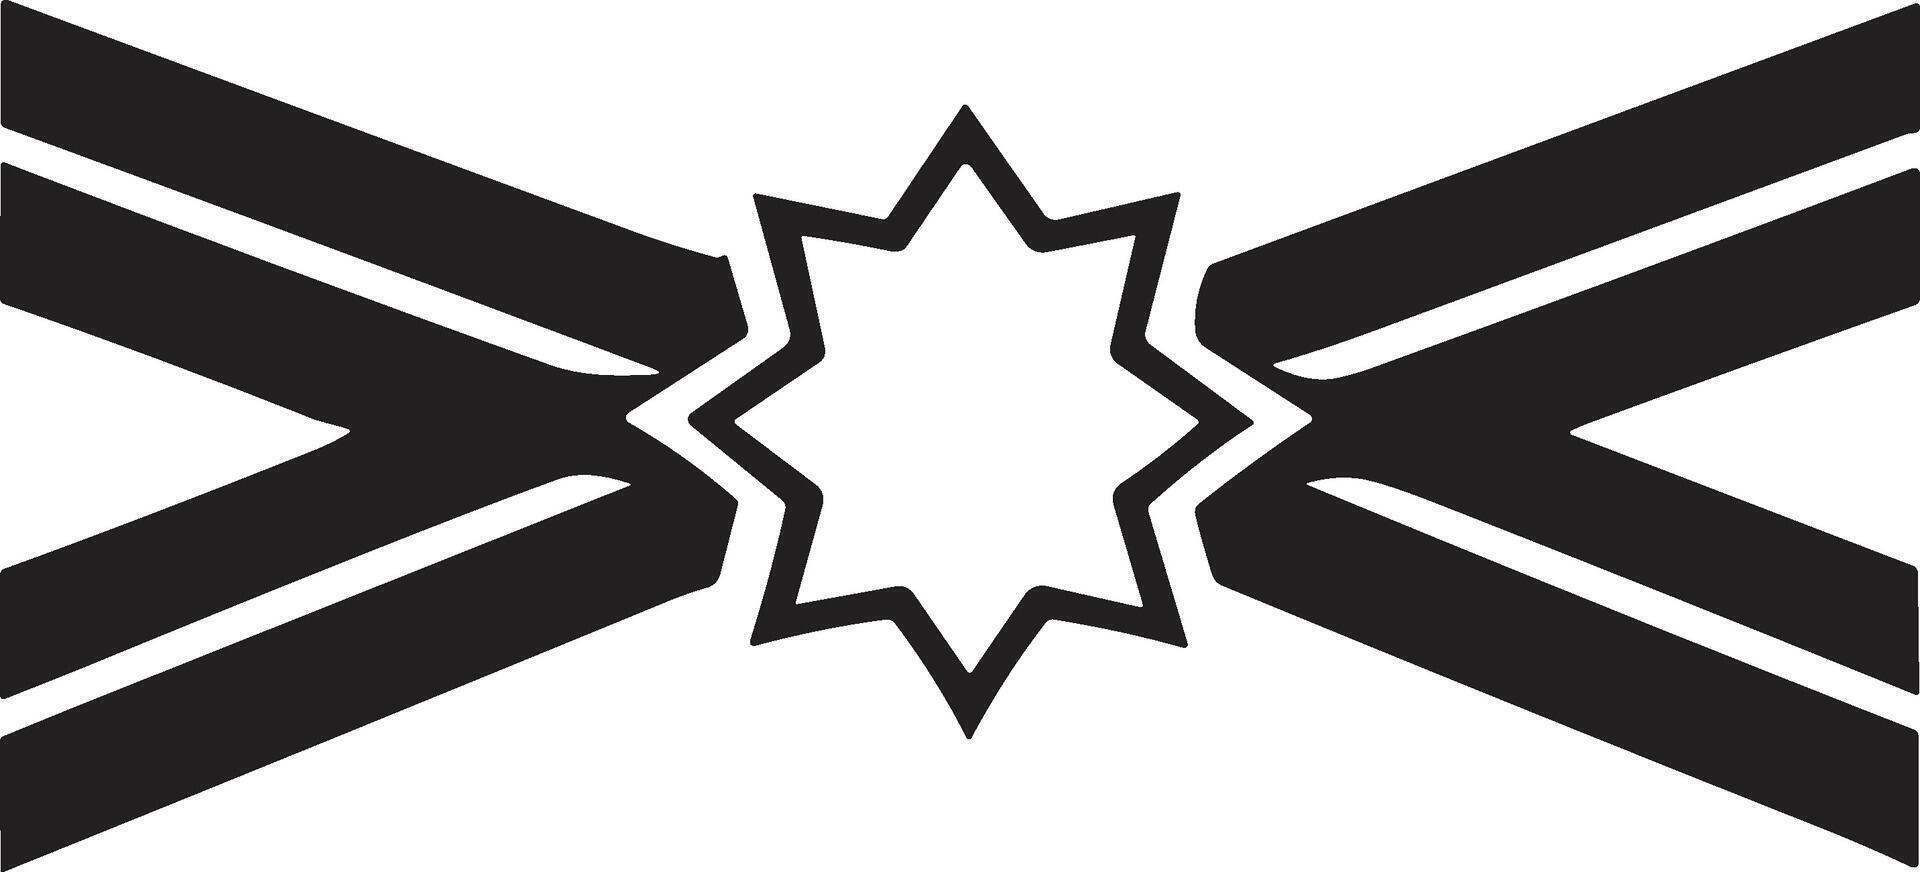 Vintage ribbon logo in modern minimal style vector